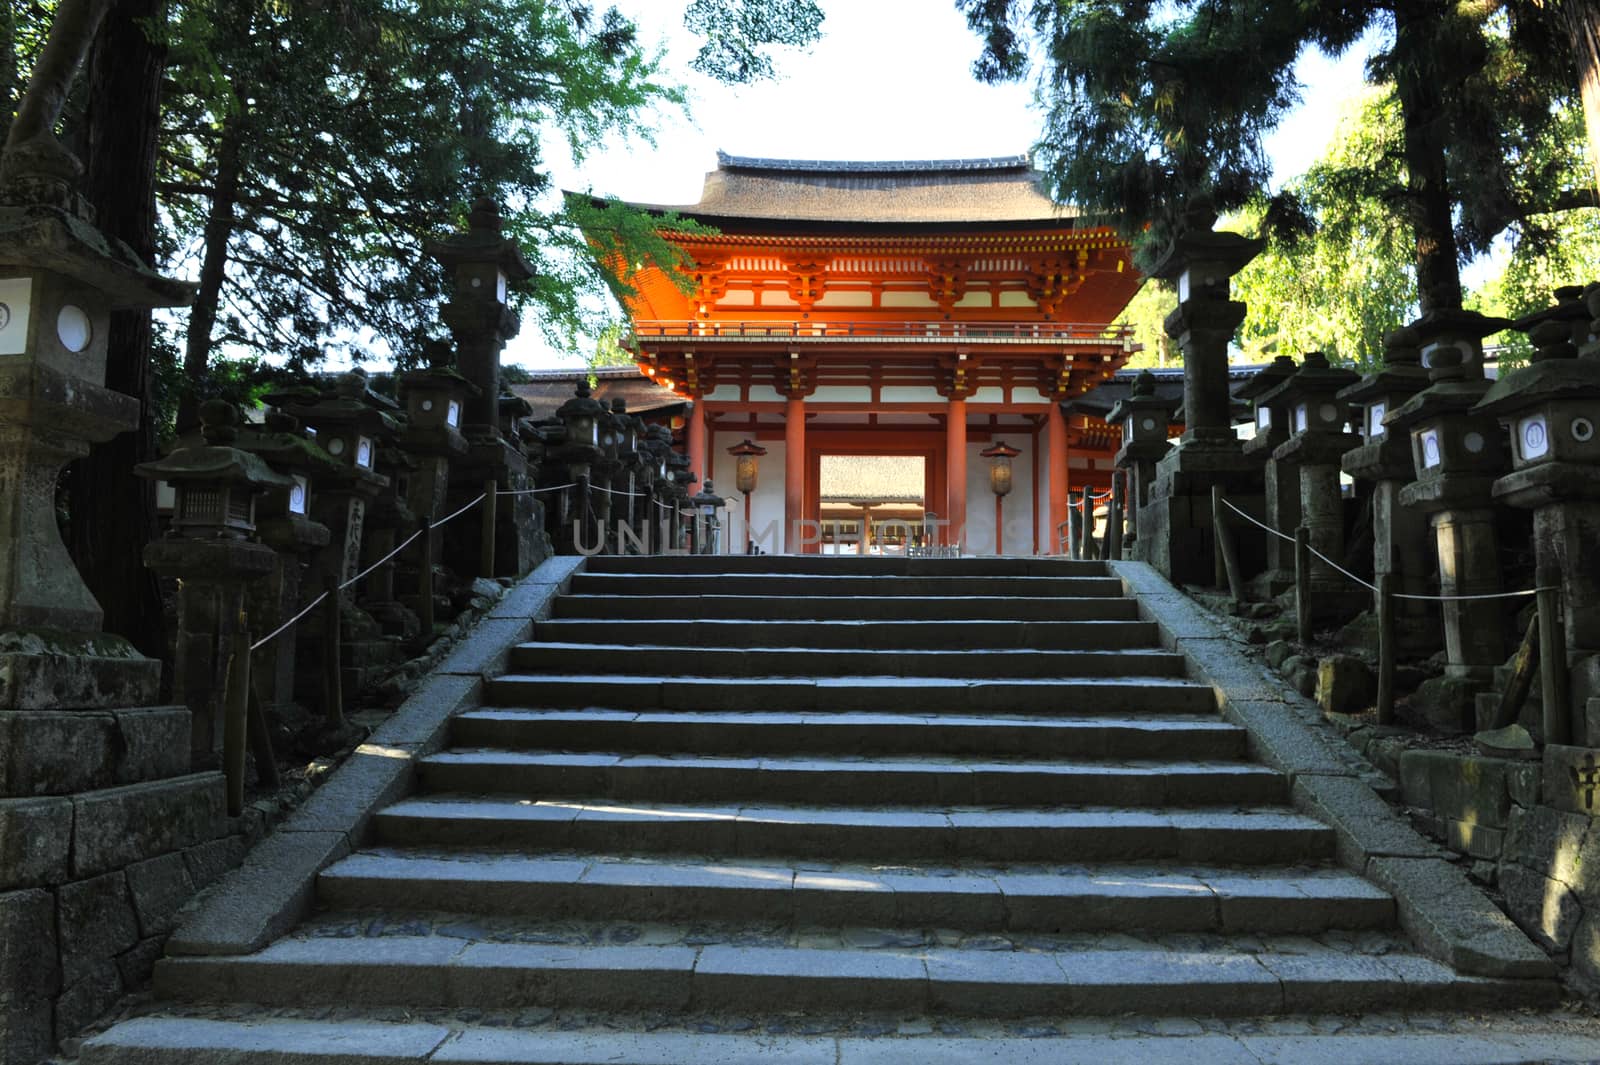 Way leading to a shinto shrine Kasuga-taisha with many traditional lanterns. Nara, Japan